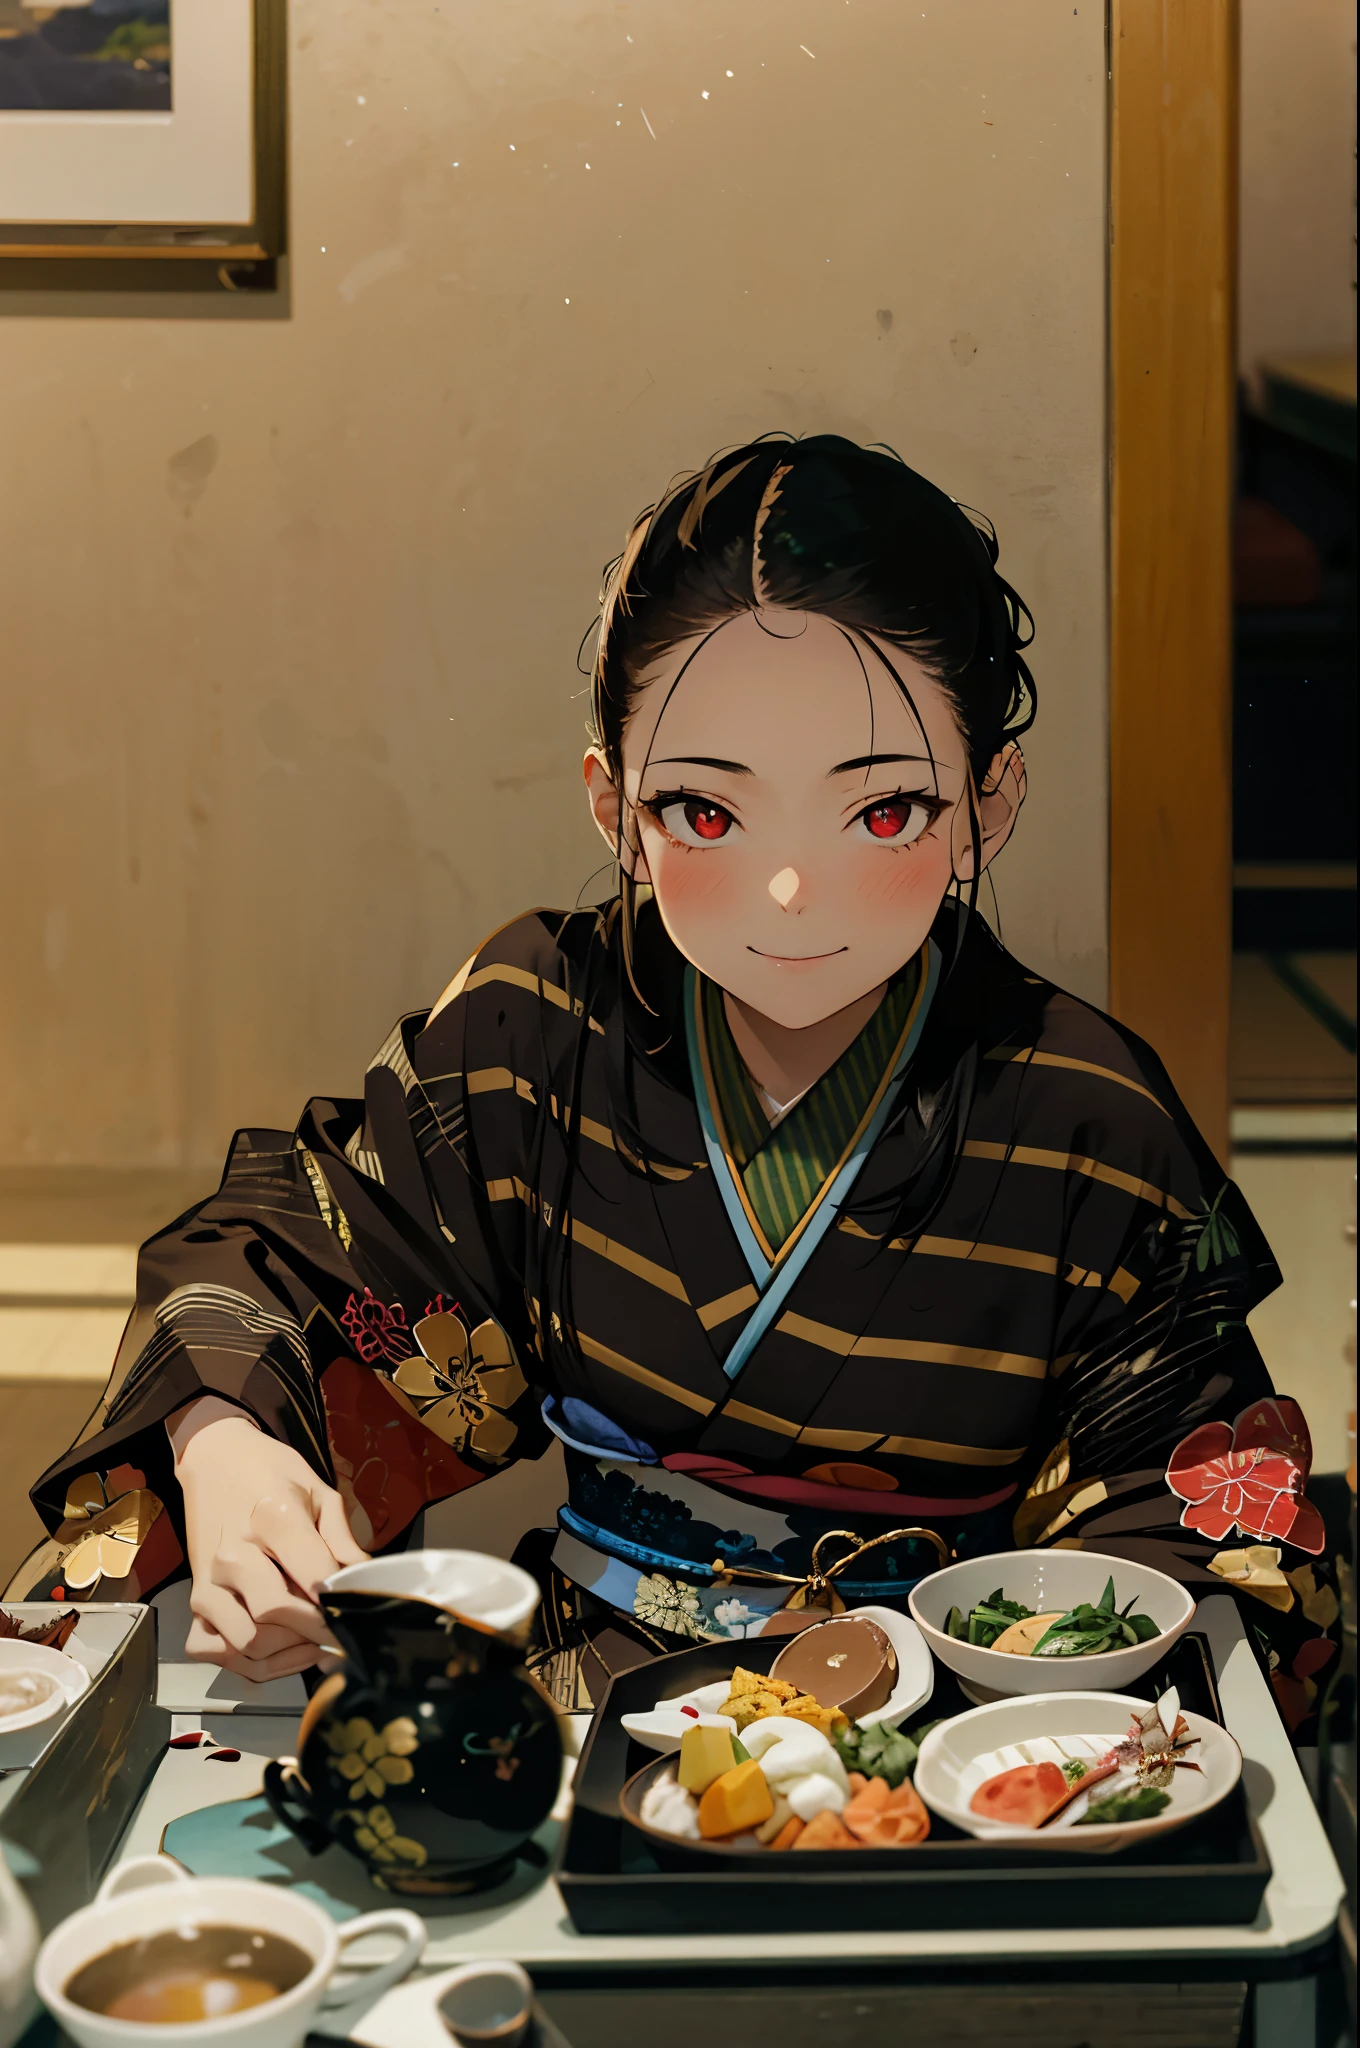 chicas japonesas ,Sesión,2 chicas, varias chicas, sonrisa, ojos rojos, Sesión,atar, pelo negro，Hermoso kimono rojo、Un hermoso pájaro está dibujado en el kimono Blush.,